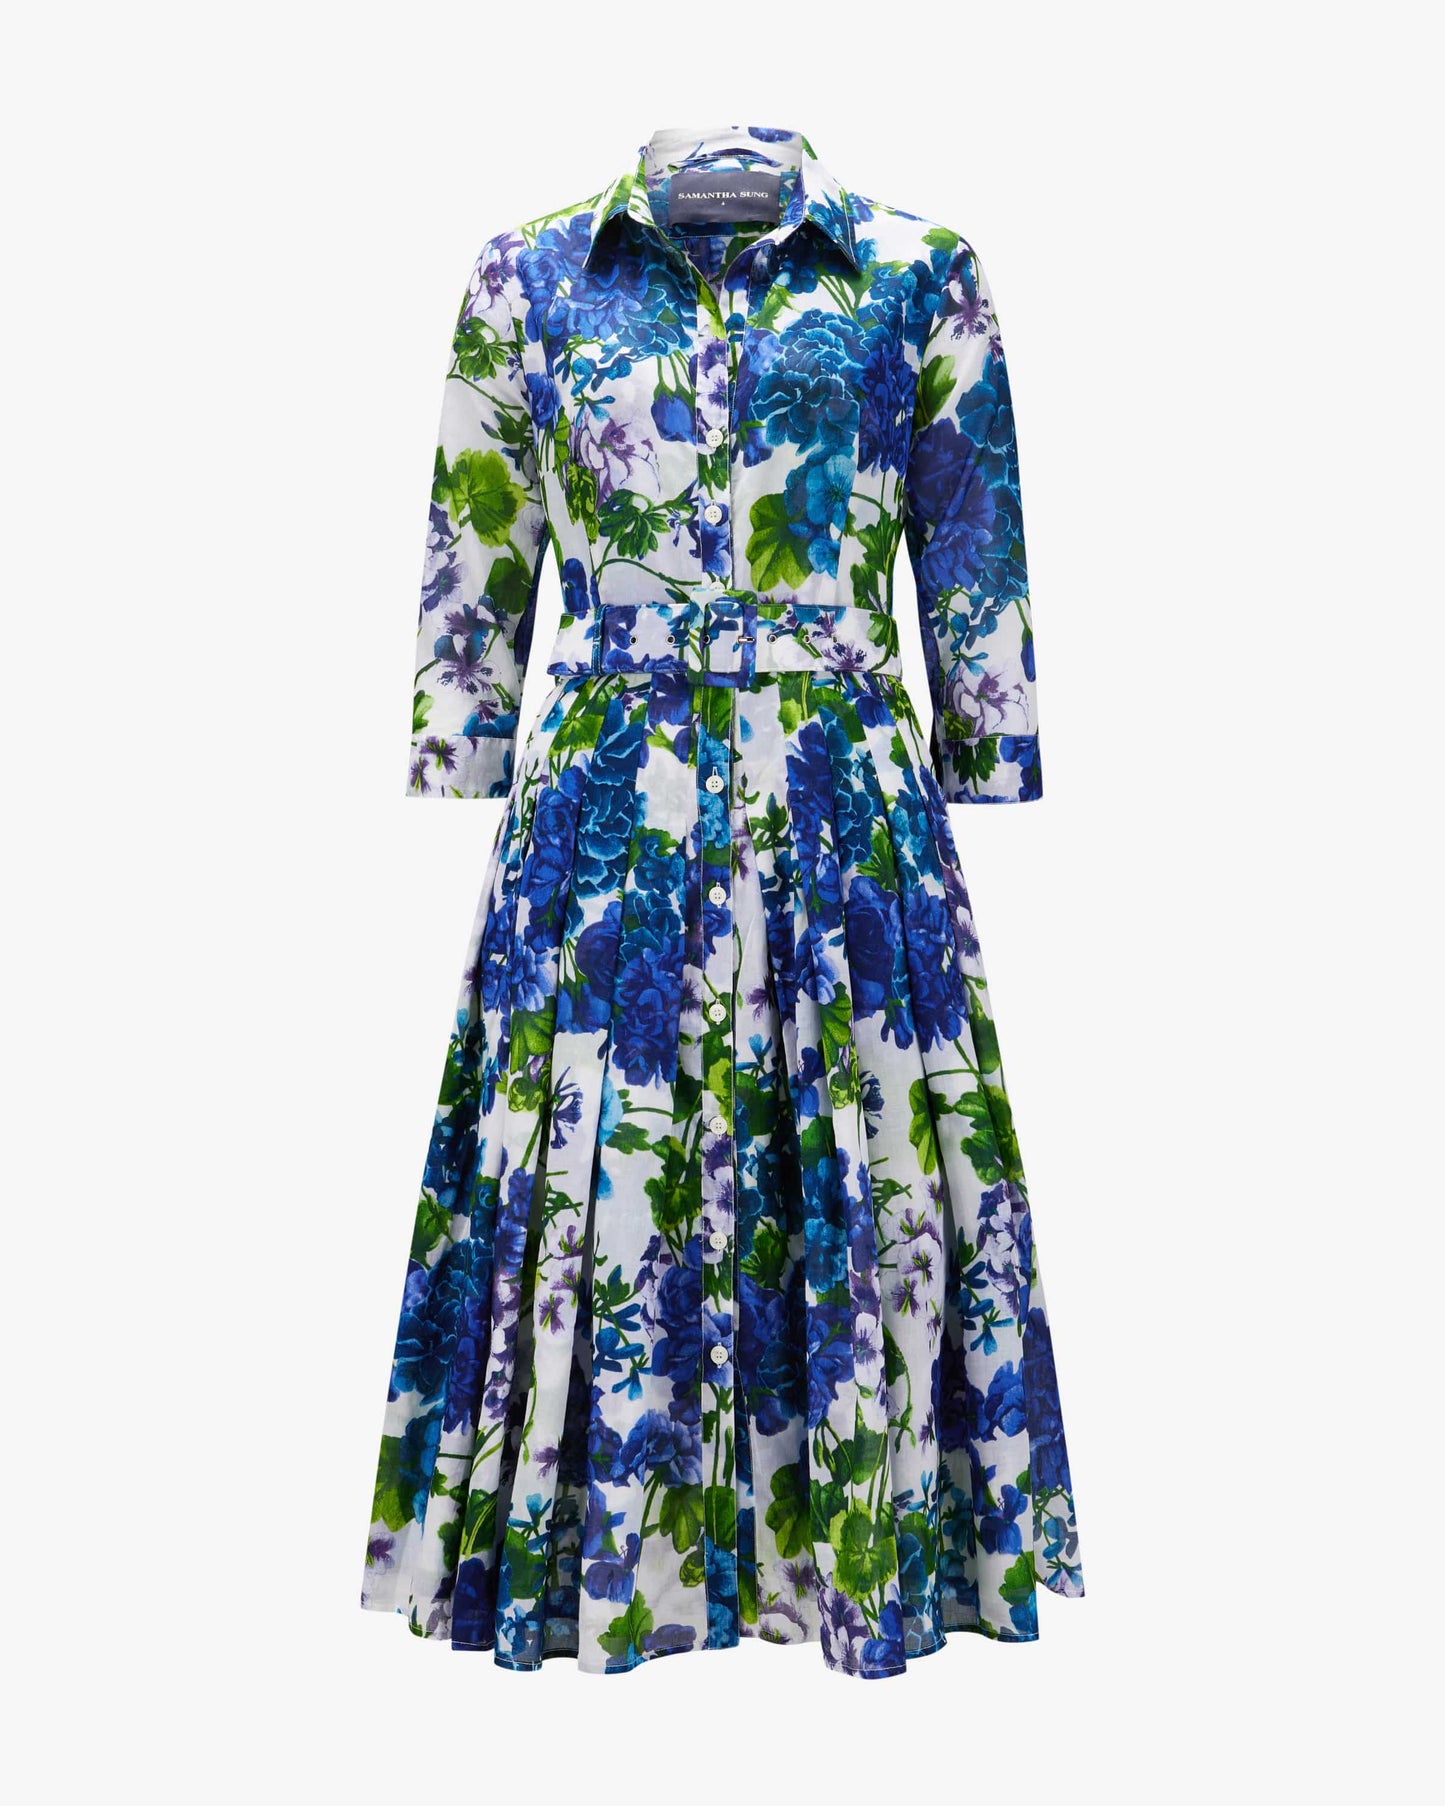 Hemdblusen-Kleid (2 Farben)